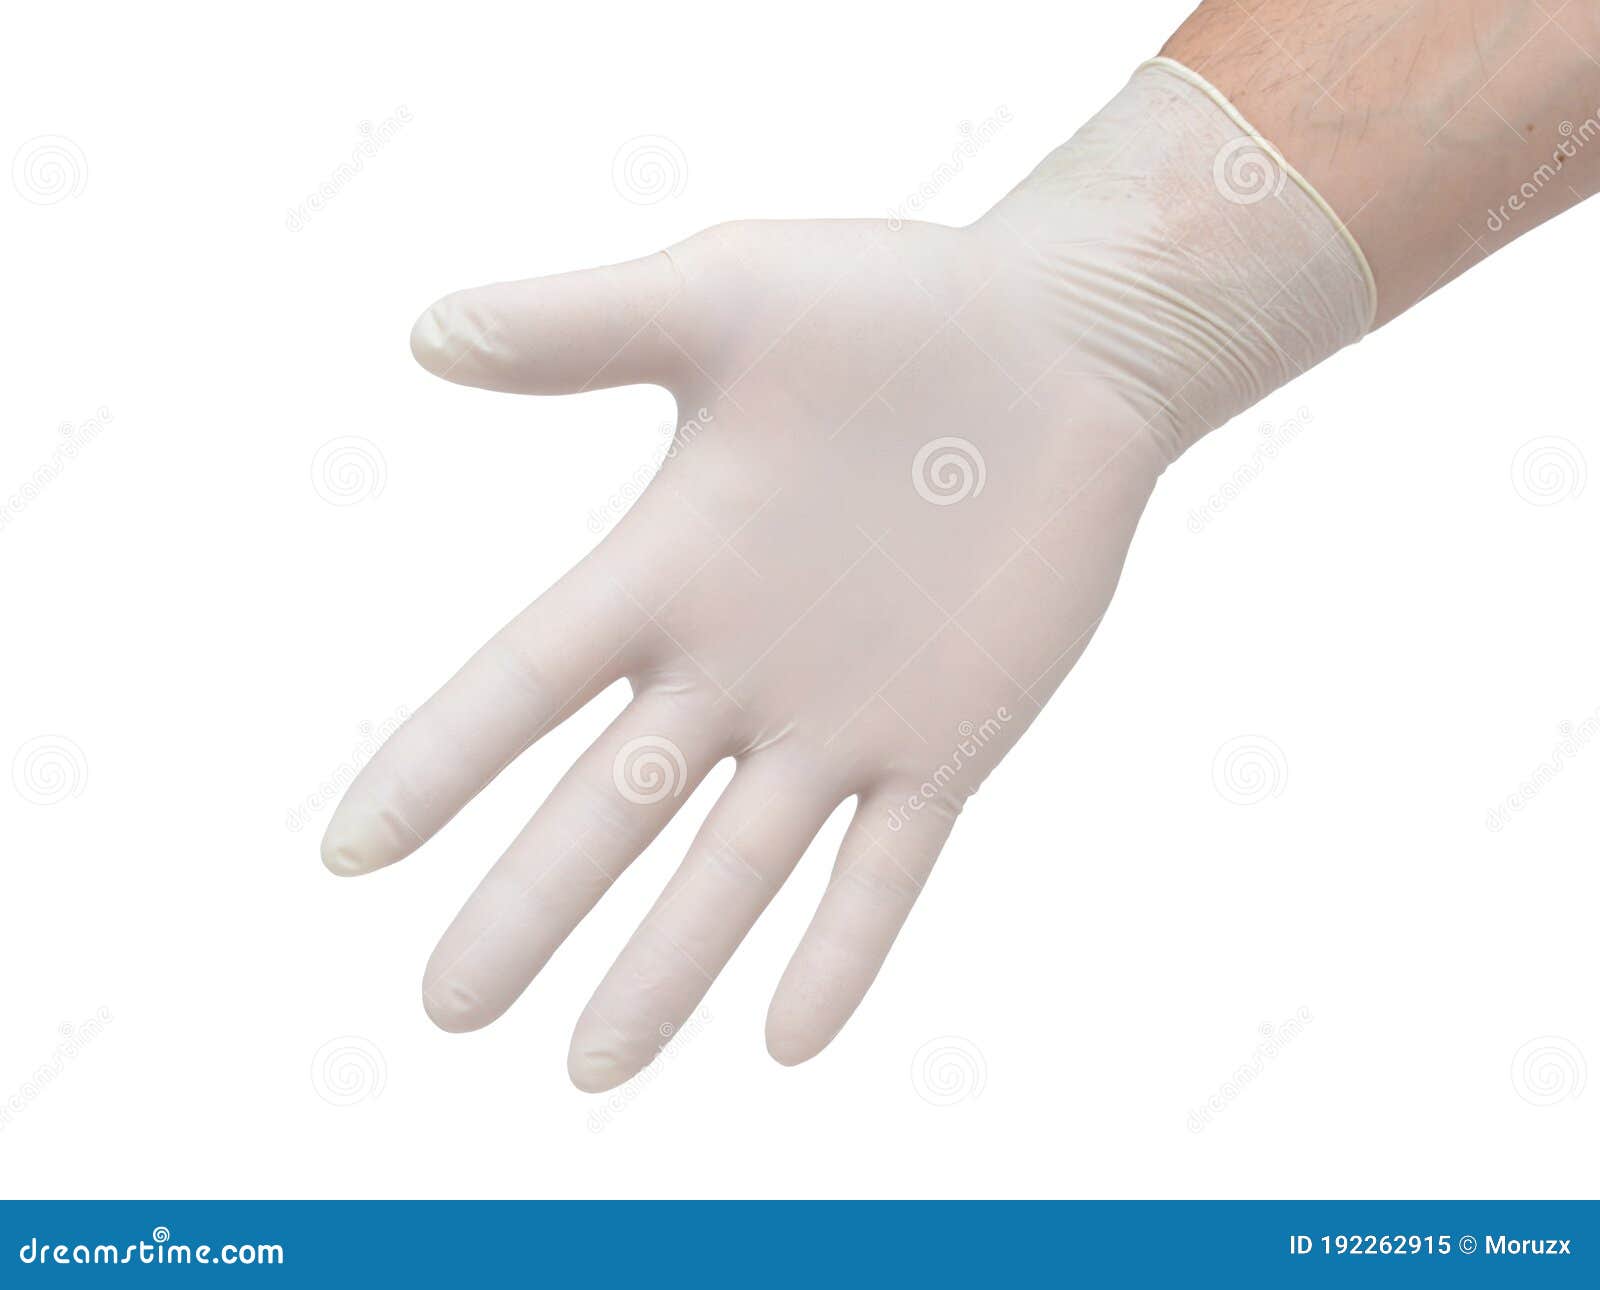 latex glove  on white background. medical gloves.